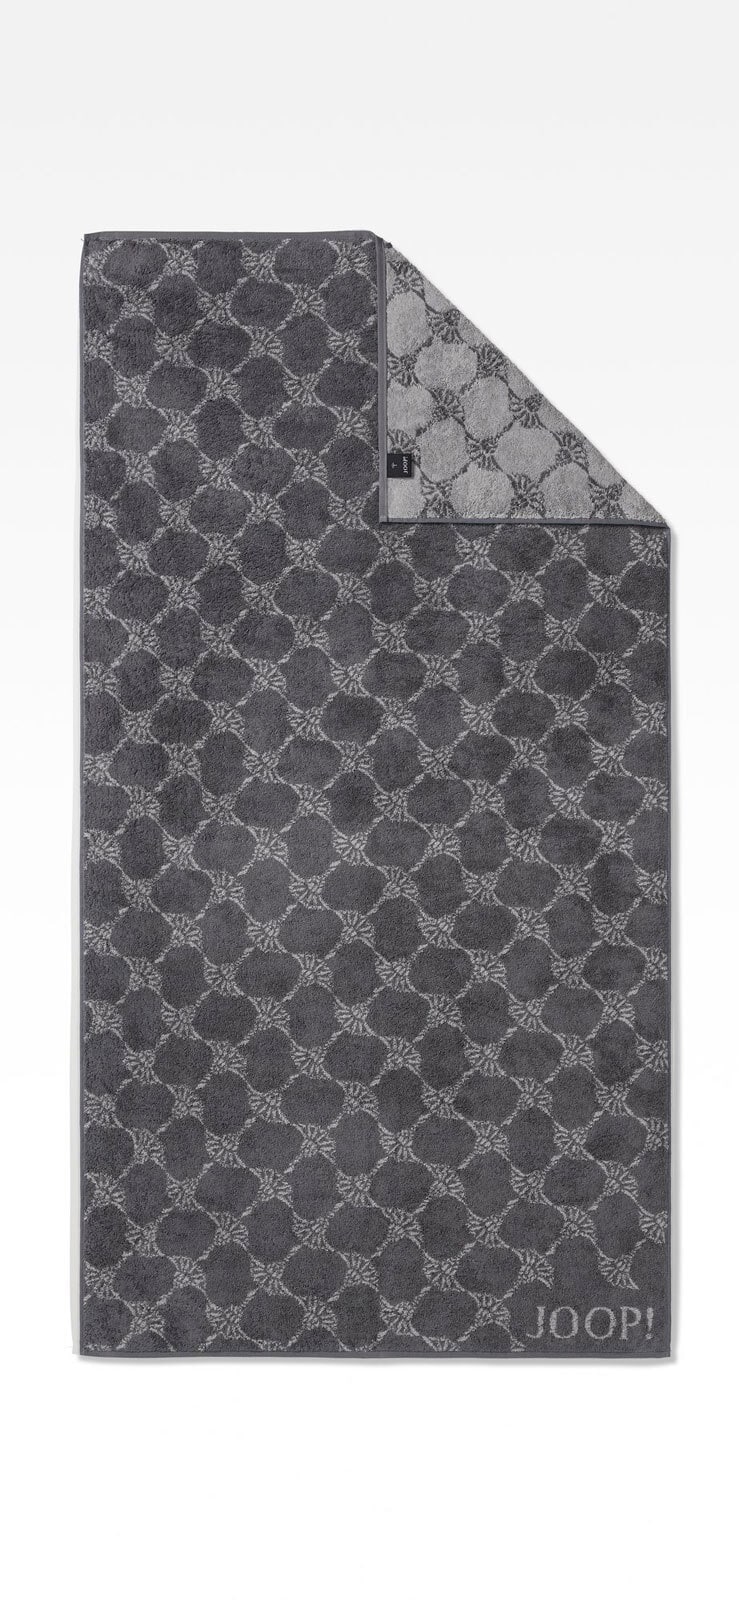 JOOP! Duschtuch CORNFLOWER CLASSIC STRIPES I 80 x 150 cm grau/schwarz